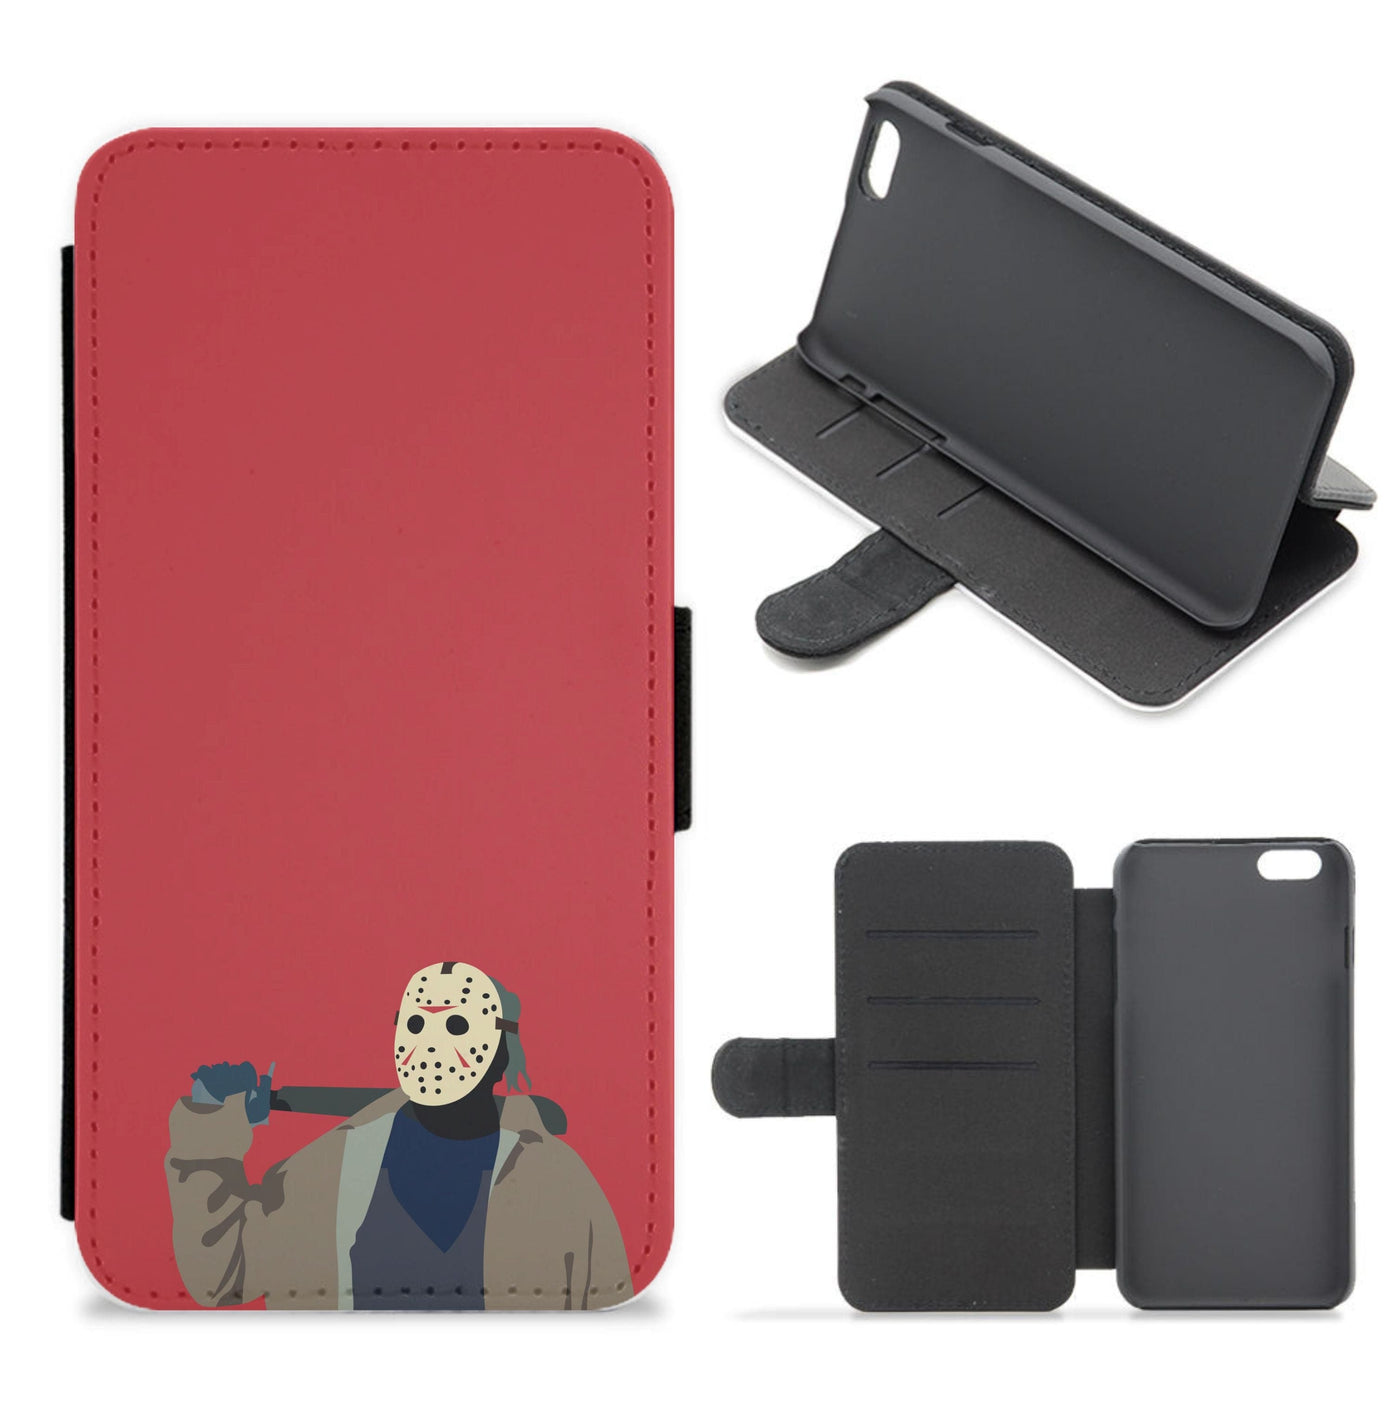 Jason - Friday The 13th Flip / Wallet Phone Case